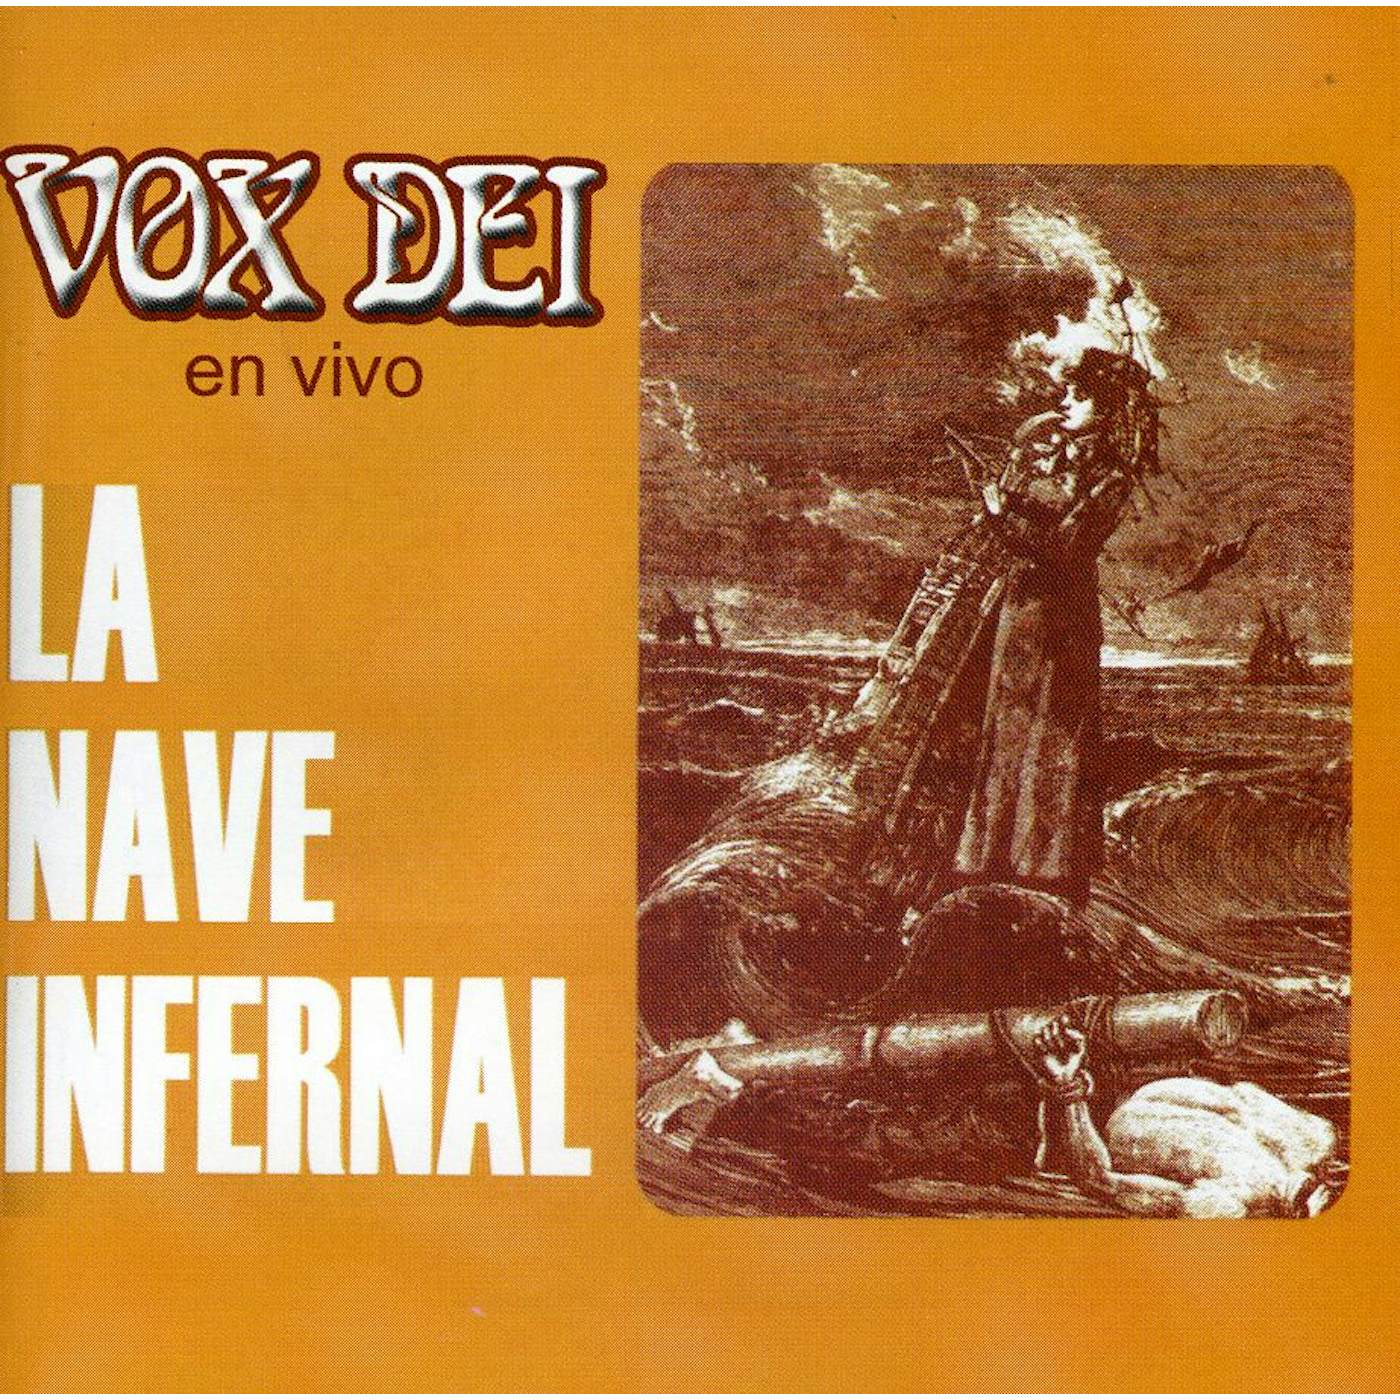 Vox Dei LA NAVE INFERNAL CD